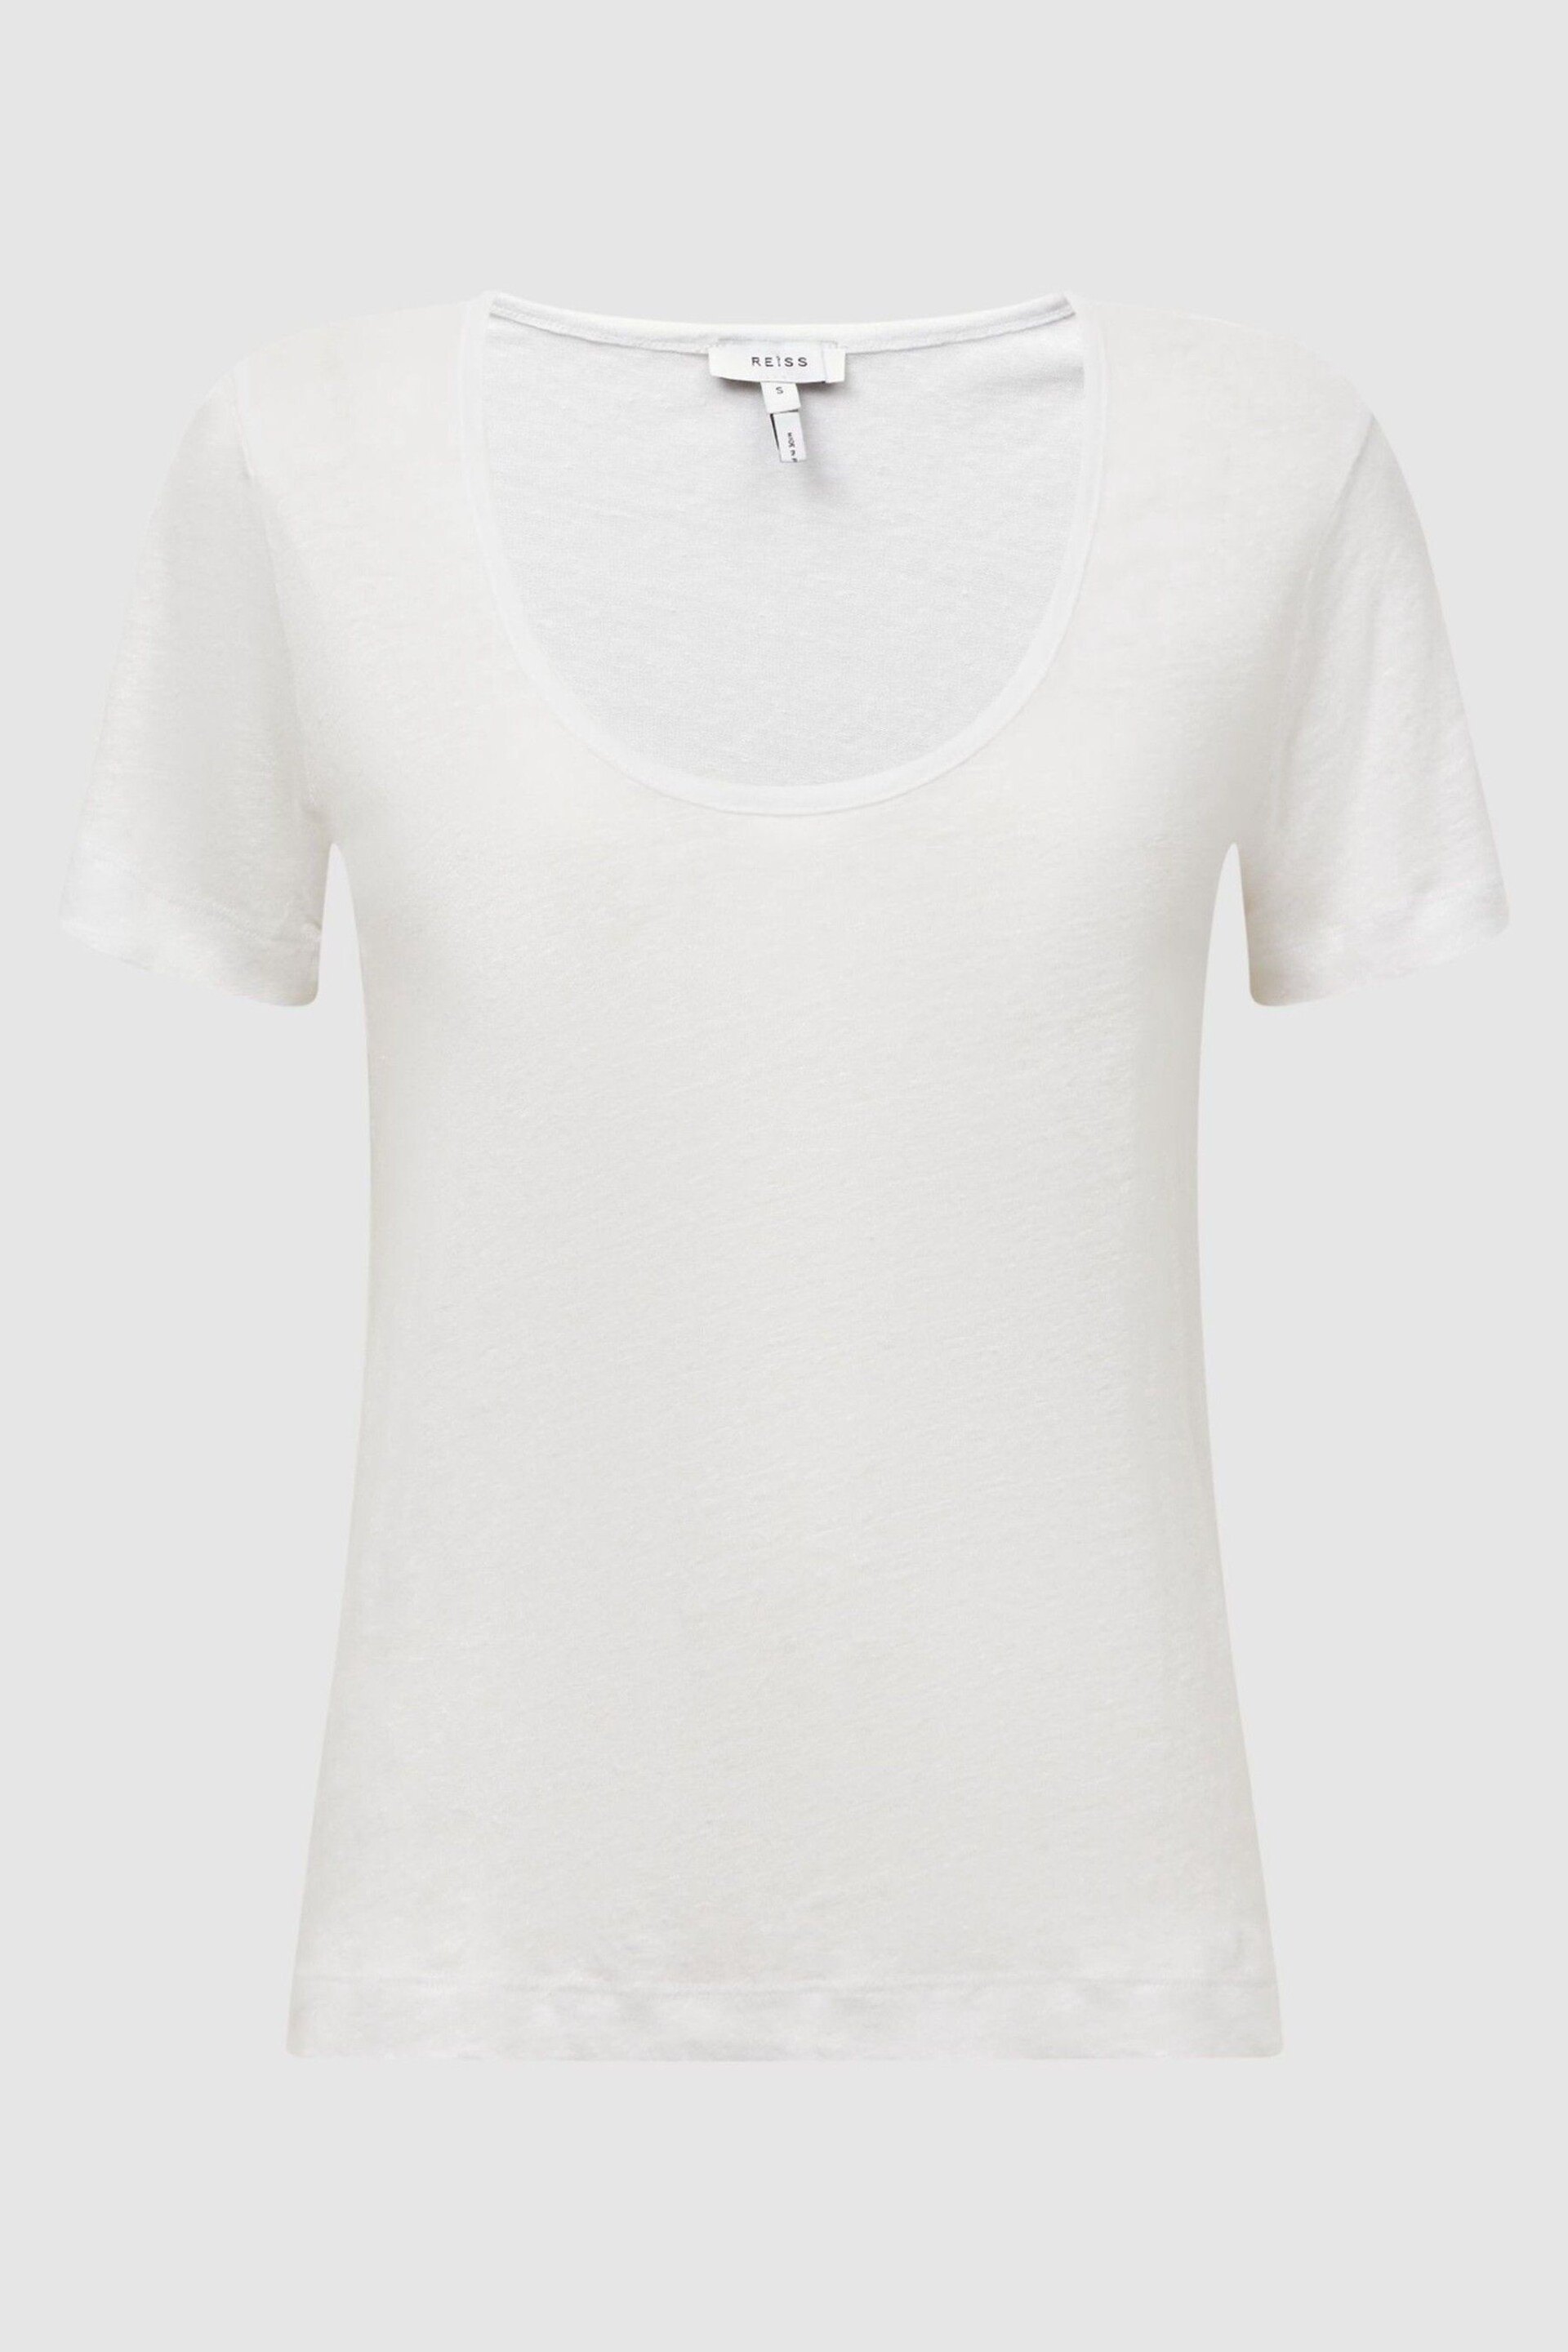 Reiss White Frances Linen Scoop Neck T-Shirt - Image 2 of 5